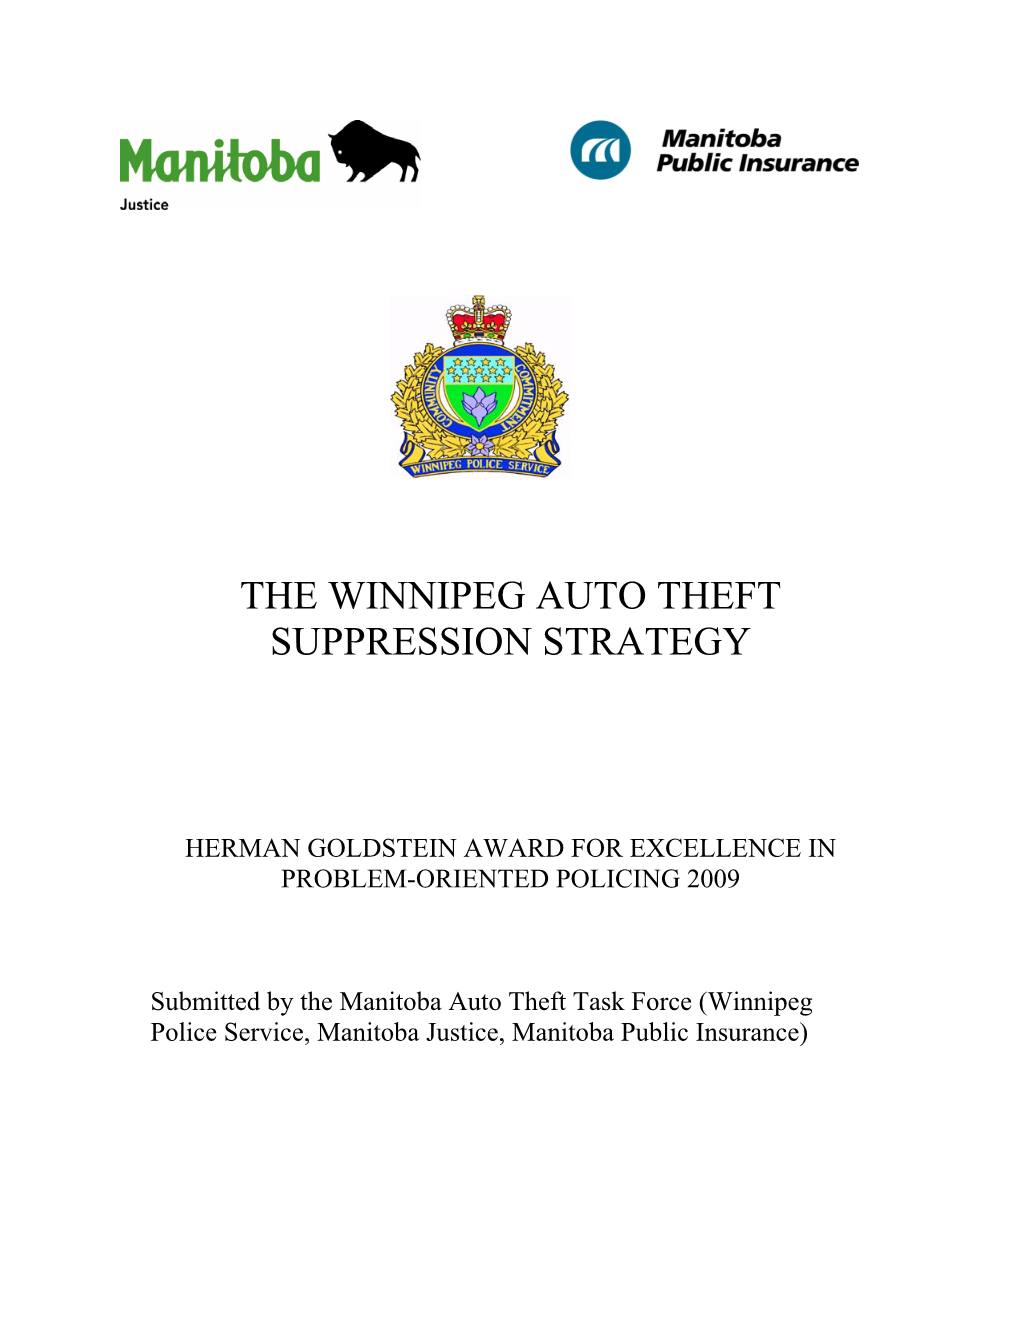 The Winnipeg Auto Theft Suppression Strategy (2009)